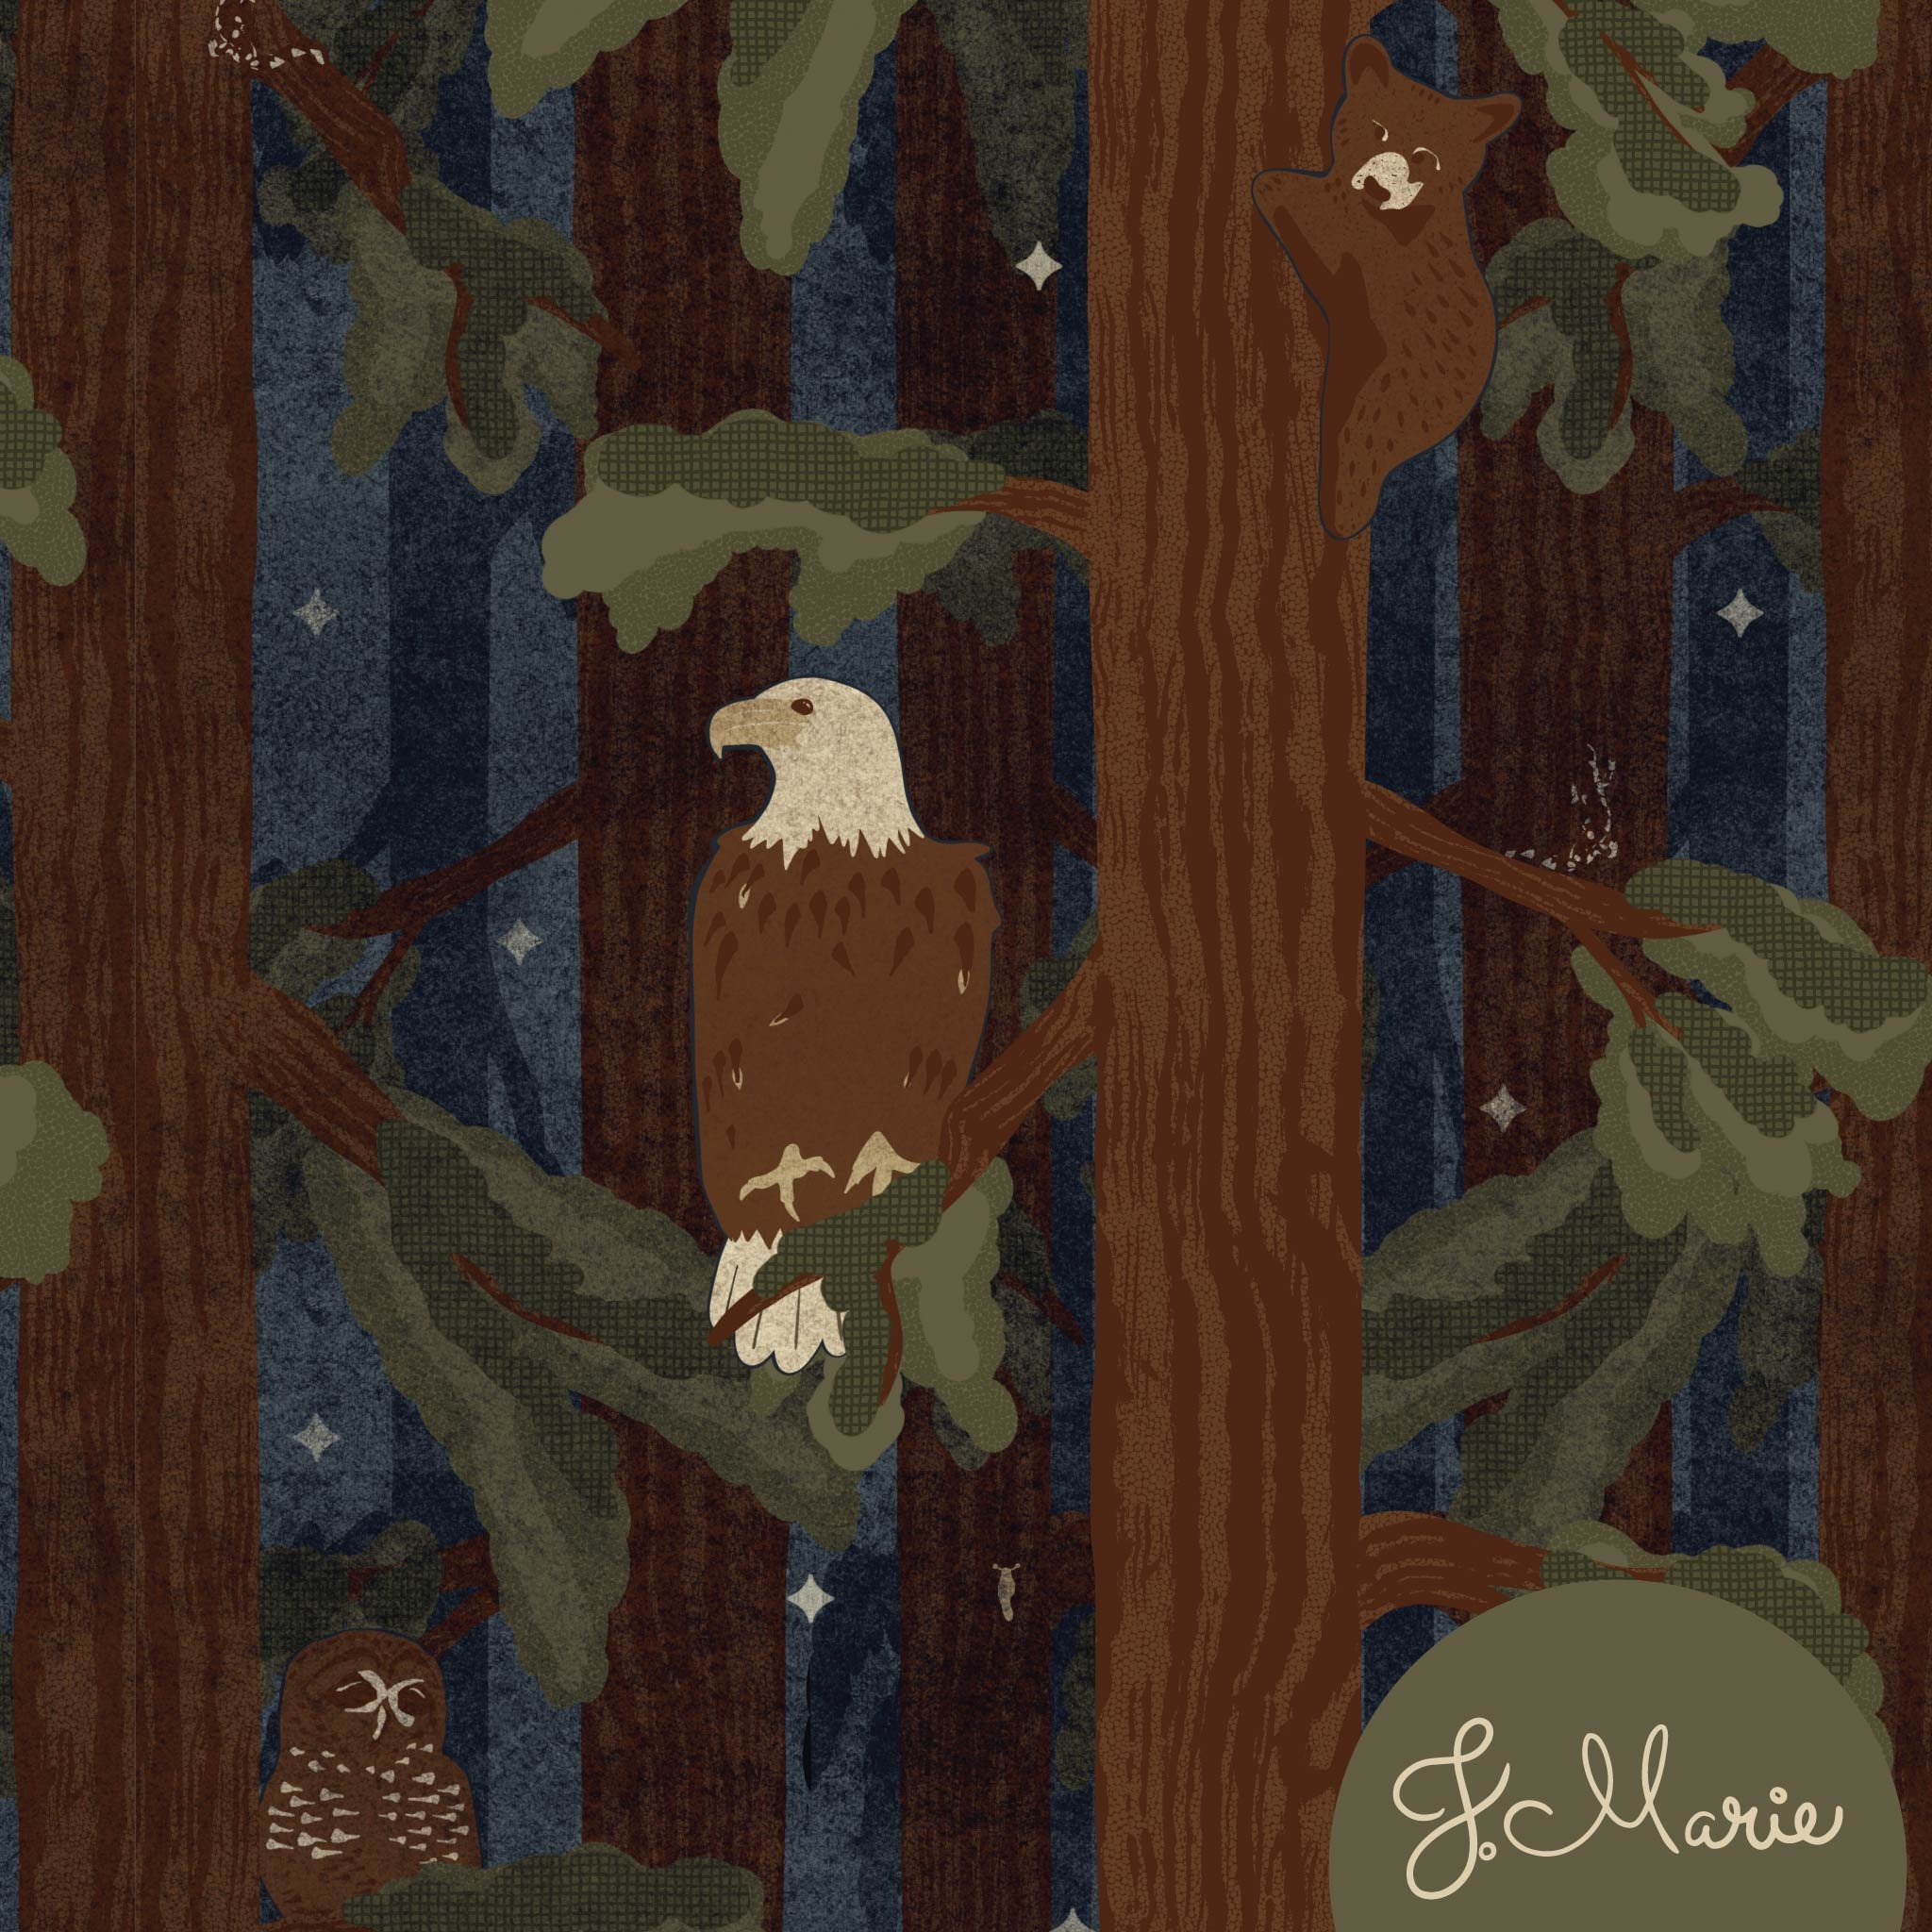 Redwood-01.jpg